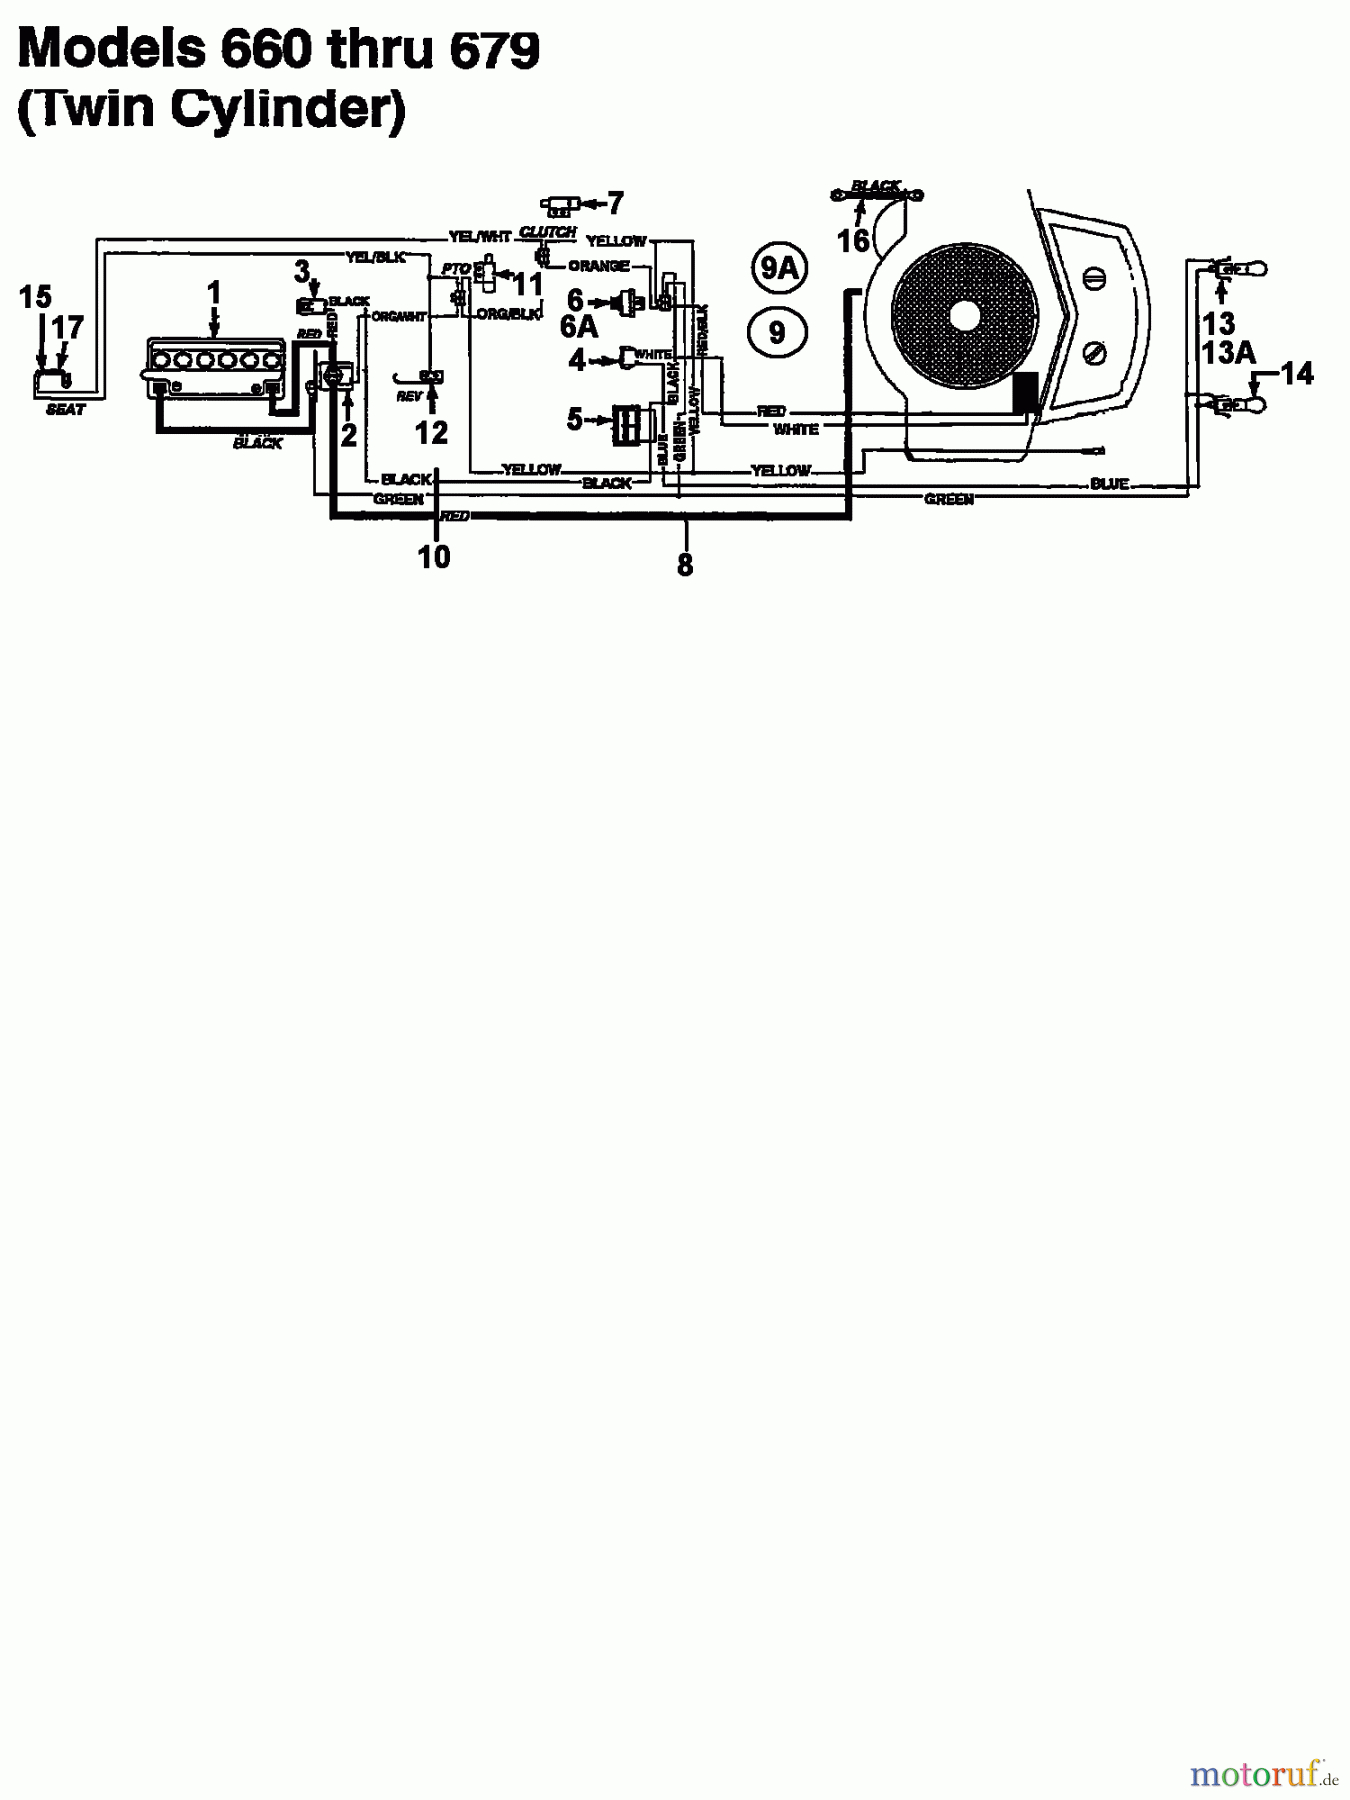  MTD Lawn tractors 11/30 133C679C600  (1993) Wiring diagram twin cylinder